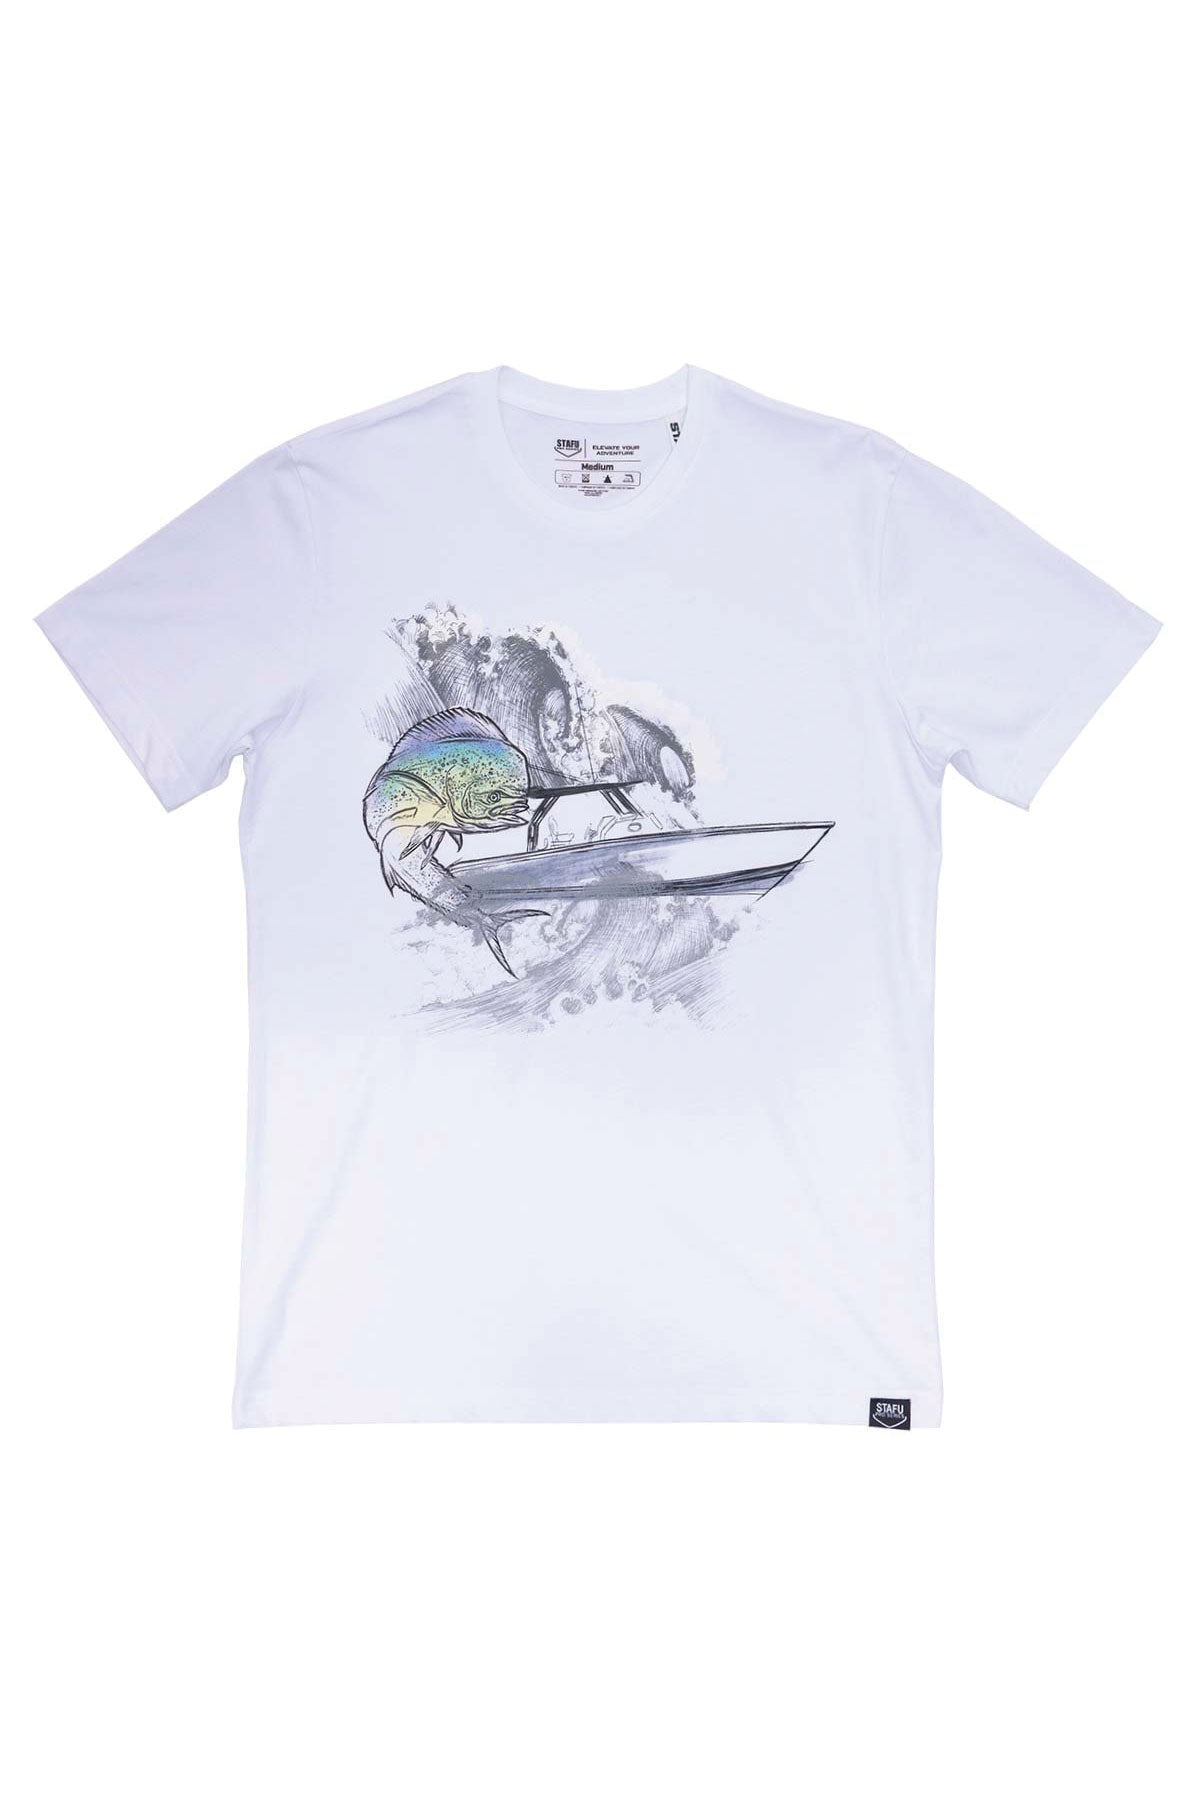 Angry Mahi Basic Short Sleeve Crew Neck T-shirt - White - Stafu Pro Series